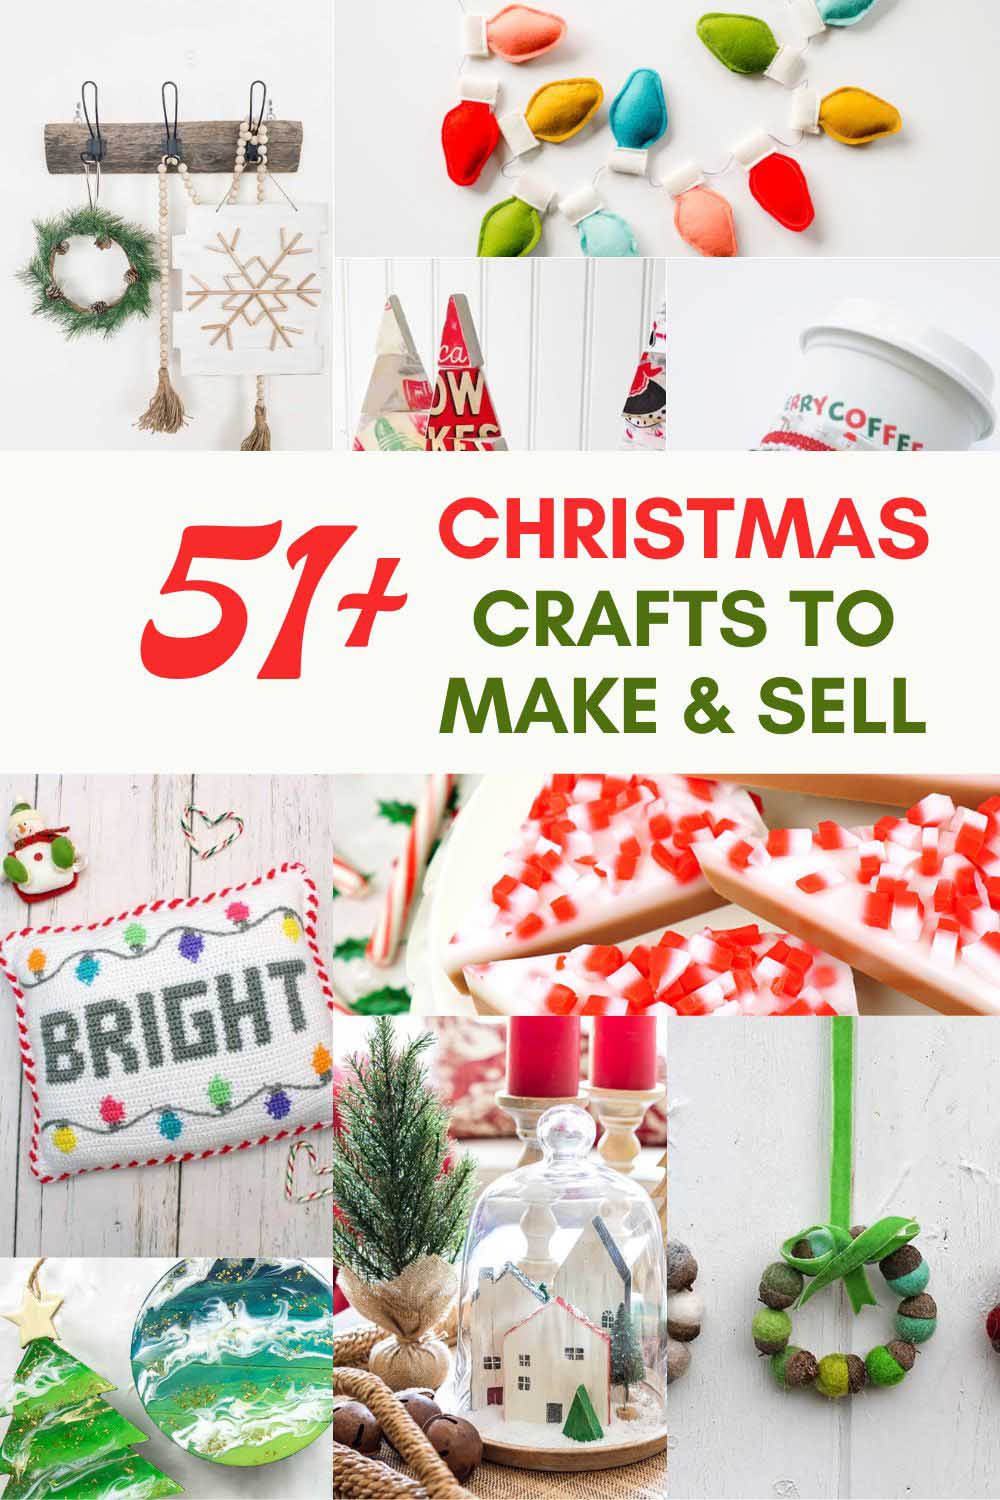 51 Christmas crafts to make and sell pin